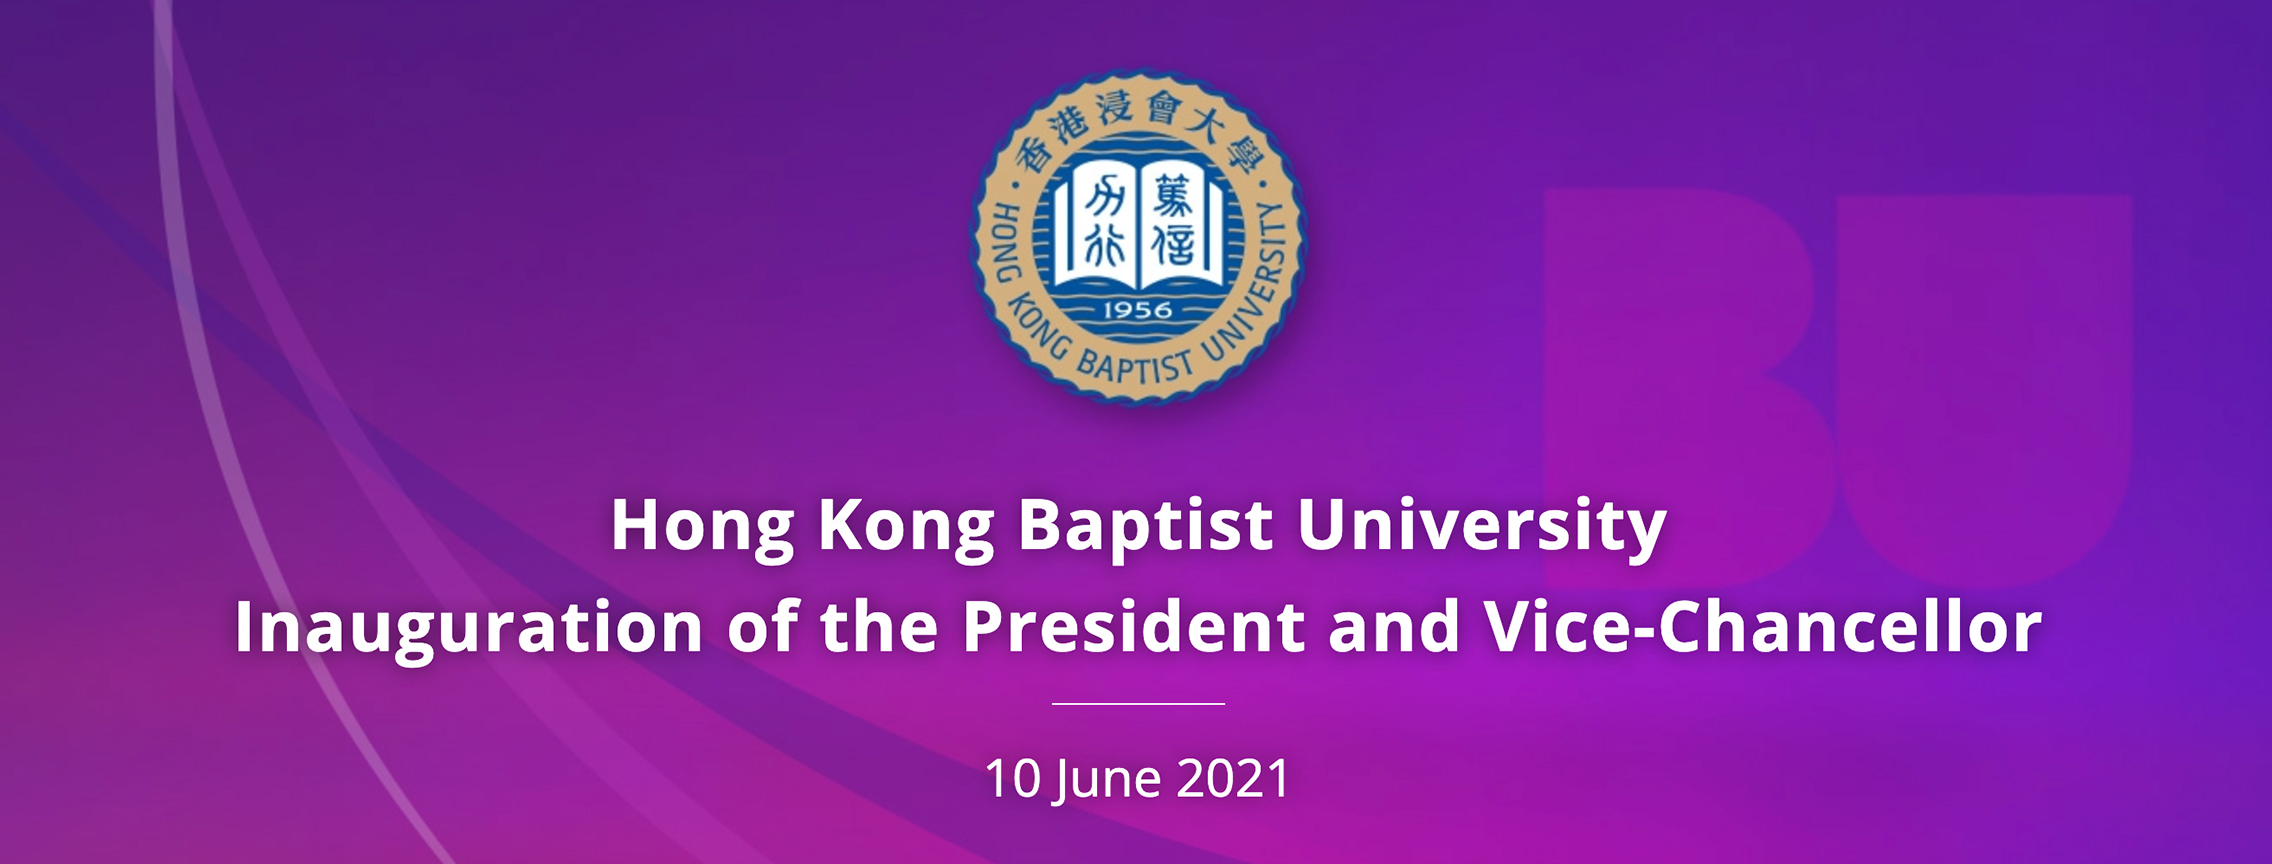 Hong Kong Baptist University Inauguration of the President and Vice-Chancellor